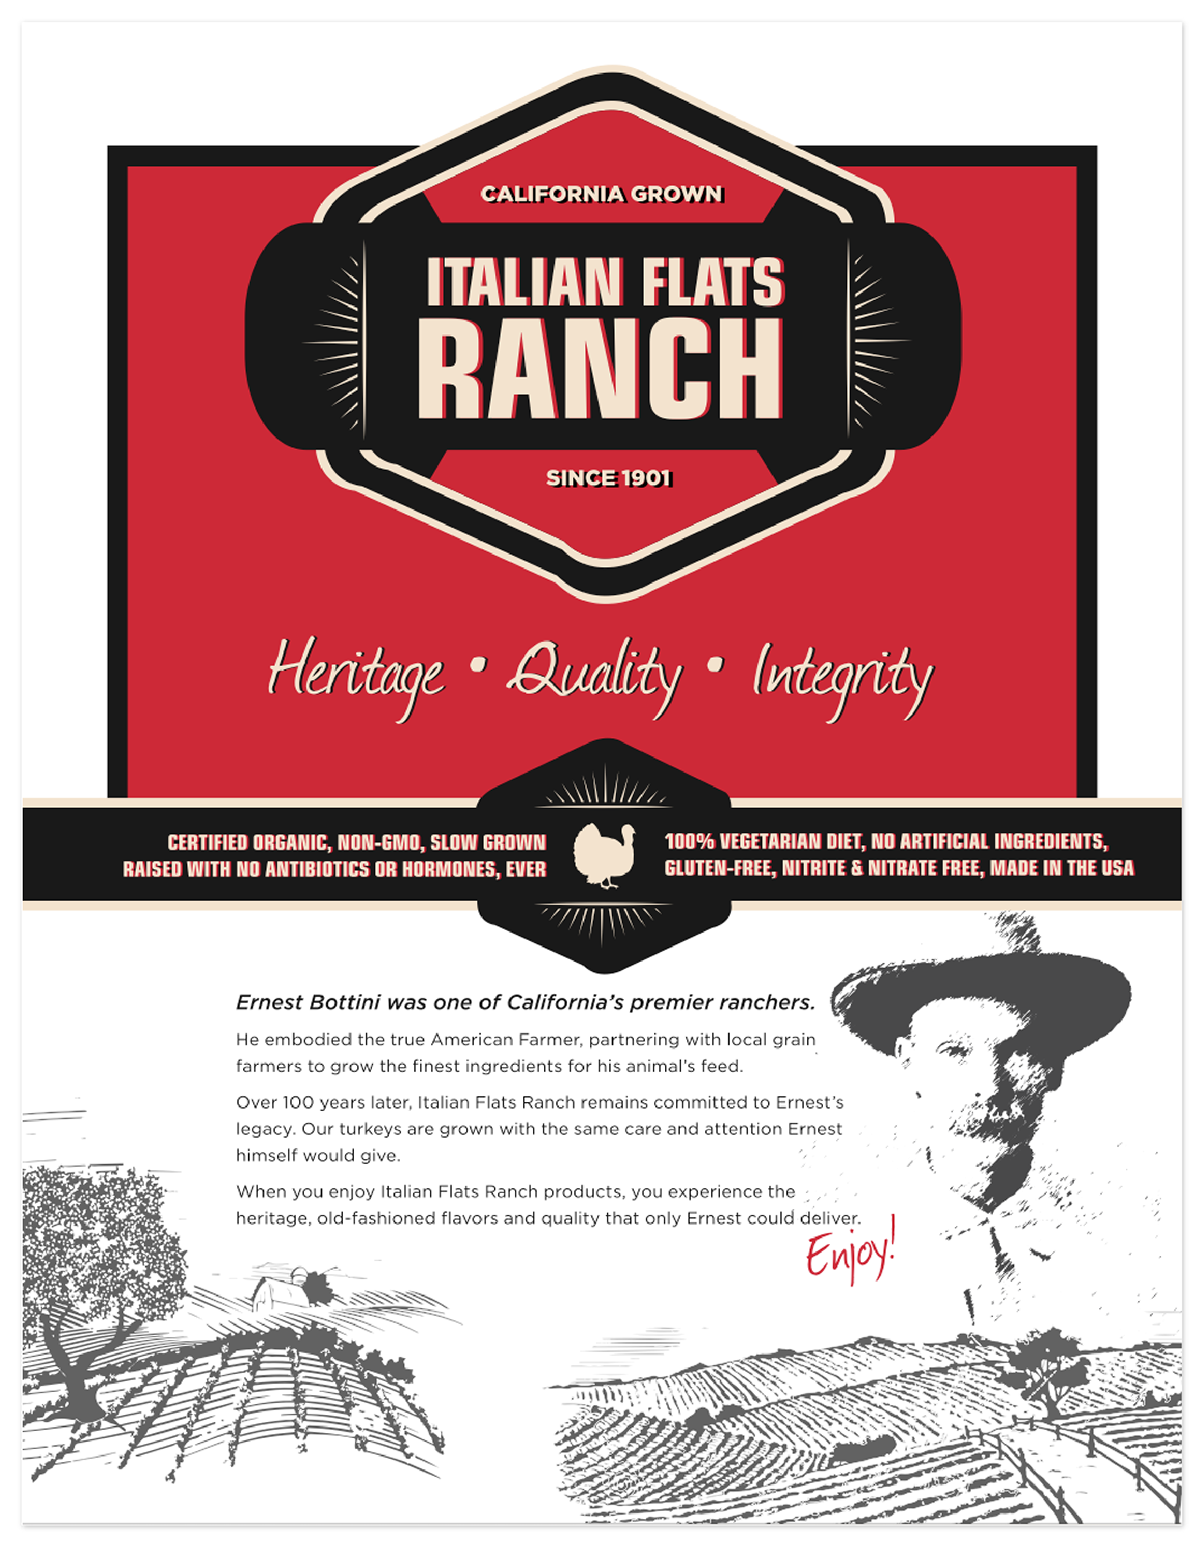 Italian Flats Ranch Turkey logo Label flyer bold contrast Retro vintage 1920s